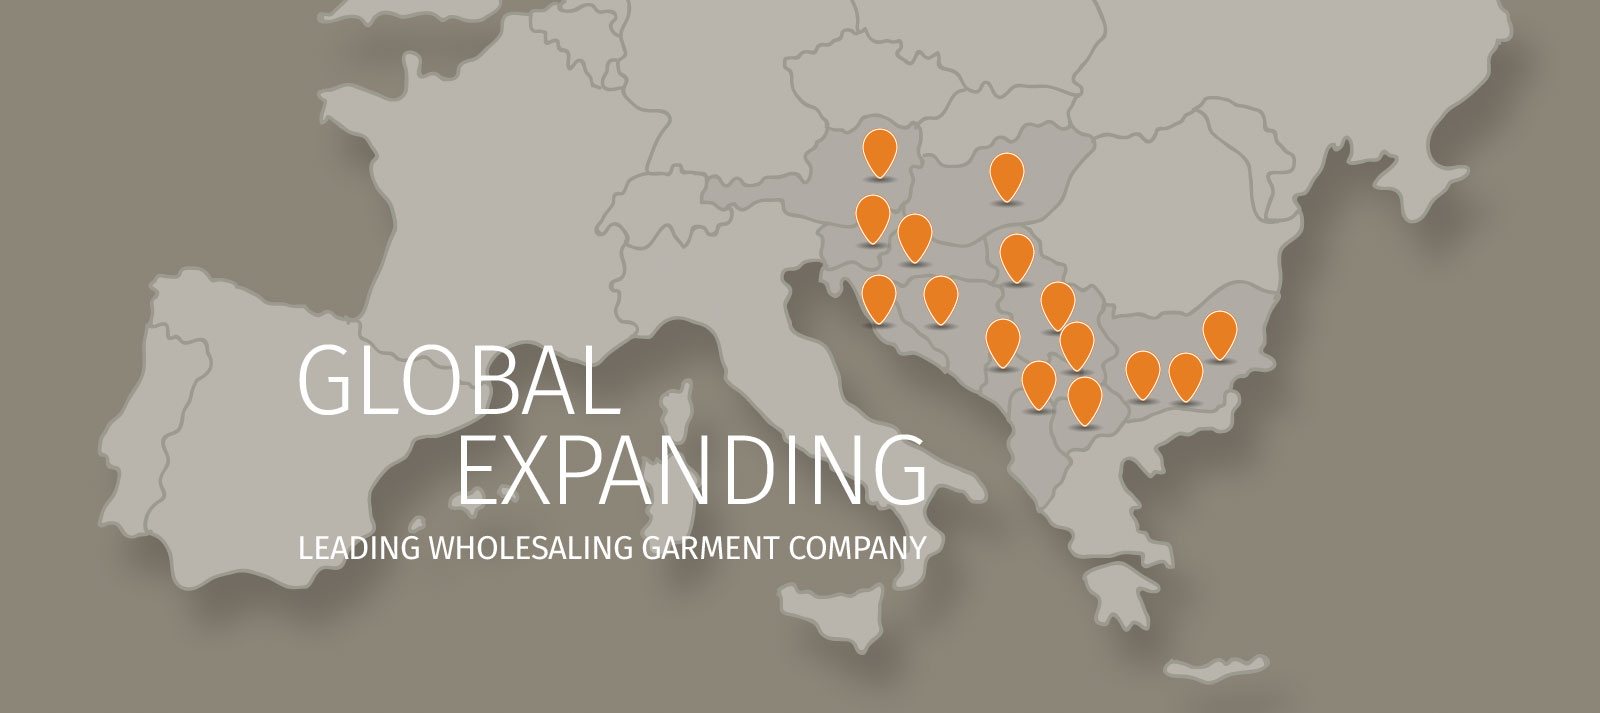 Global Expanding - Leading Wholesaling Garment Company